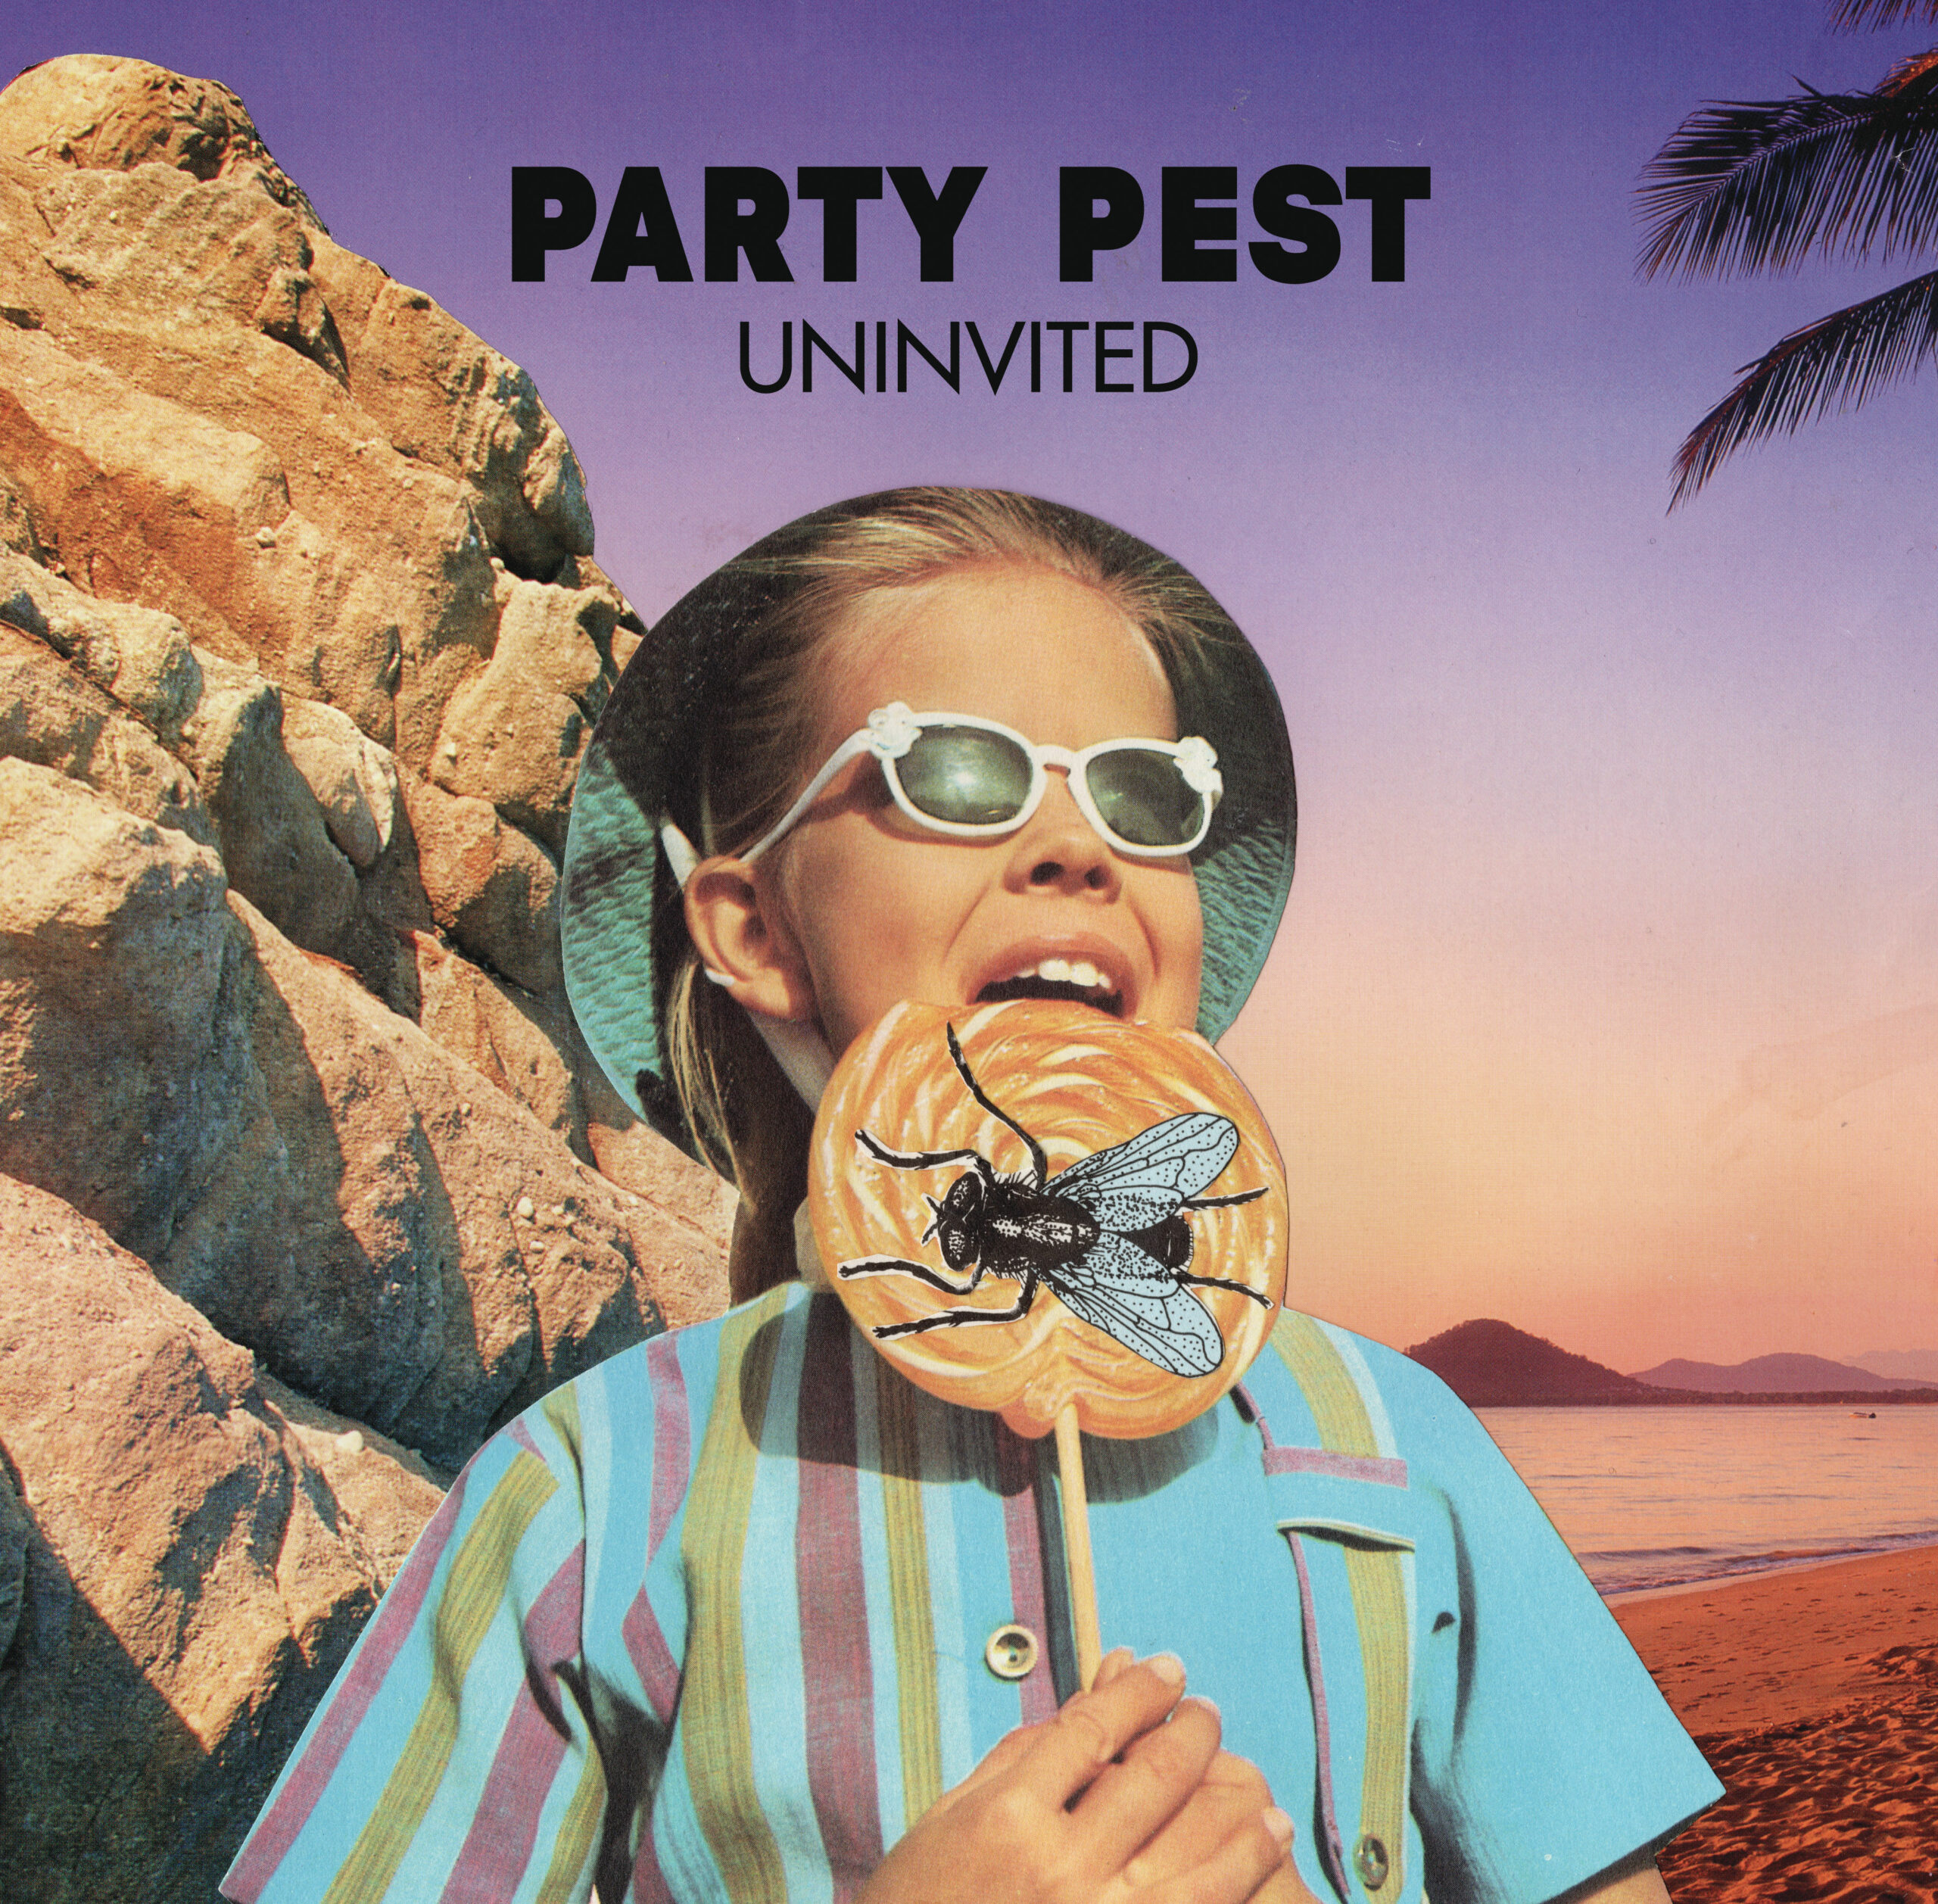 Party Pest Uninvited vinyl album Beast Records